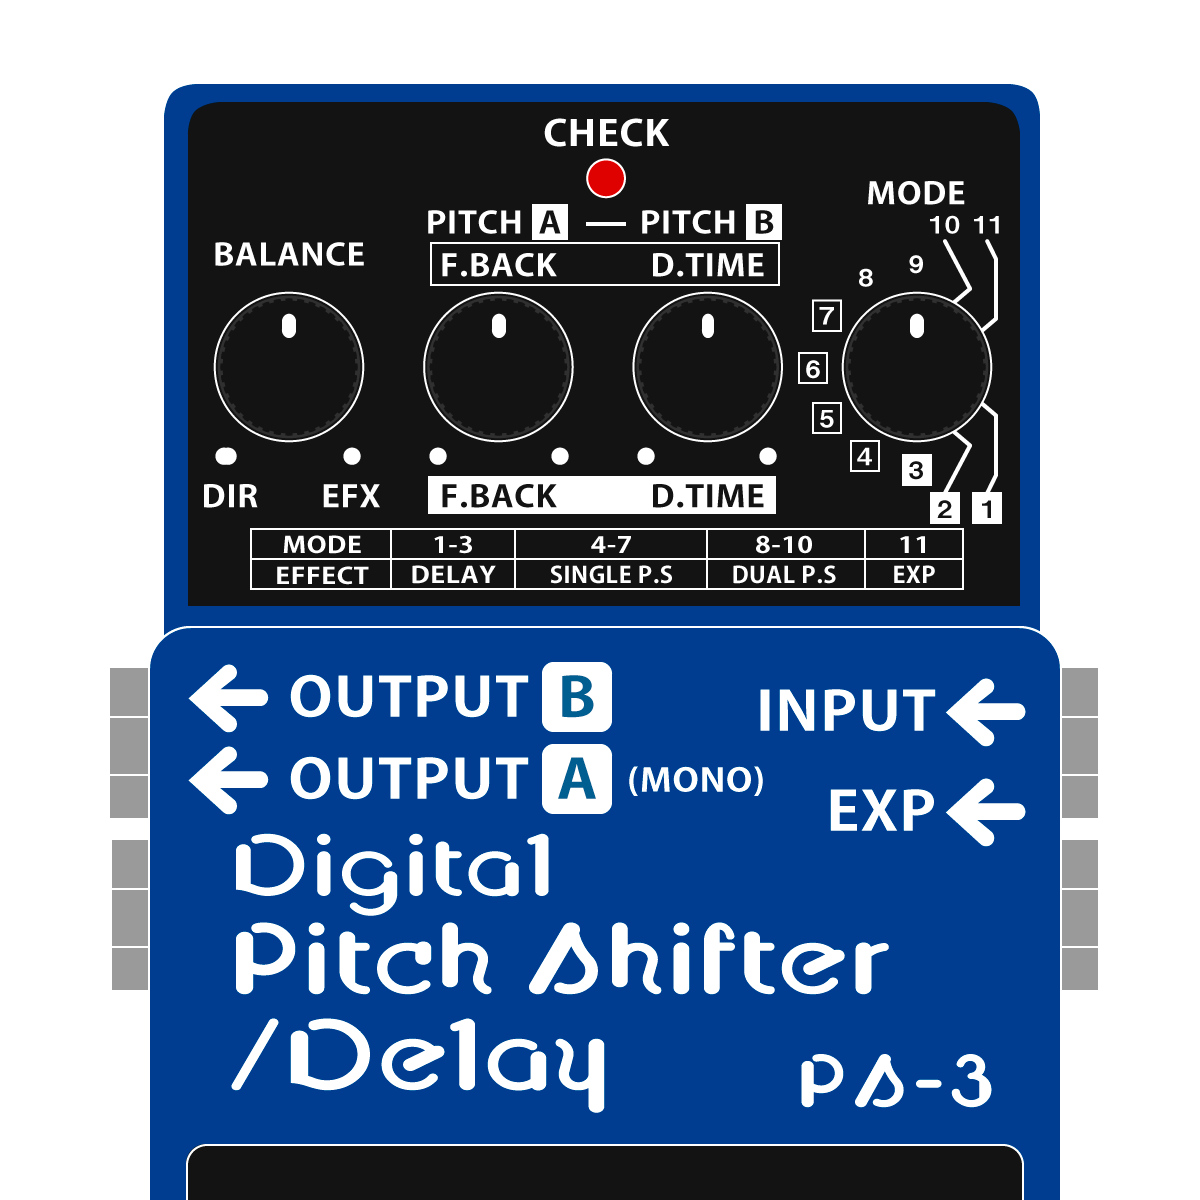 PS-2 Digital Pitch Shifter / Delay（デジタルピッチシフター 